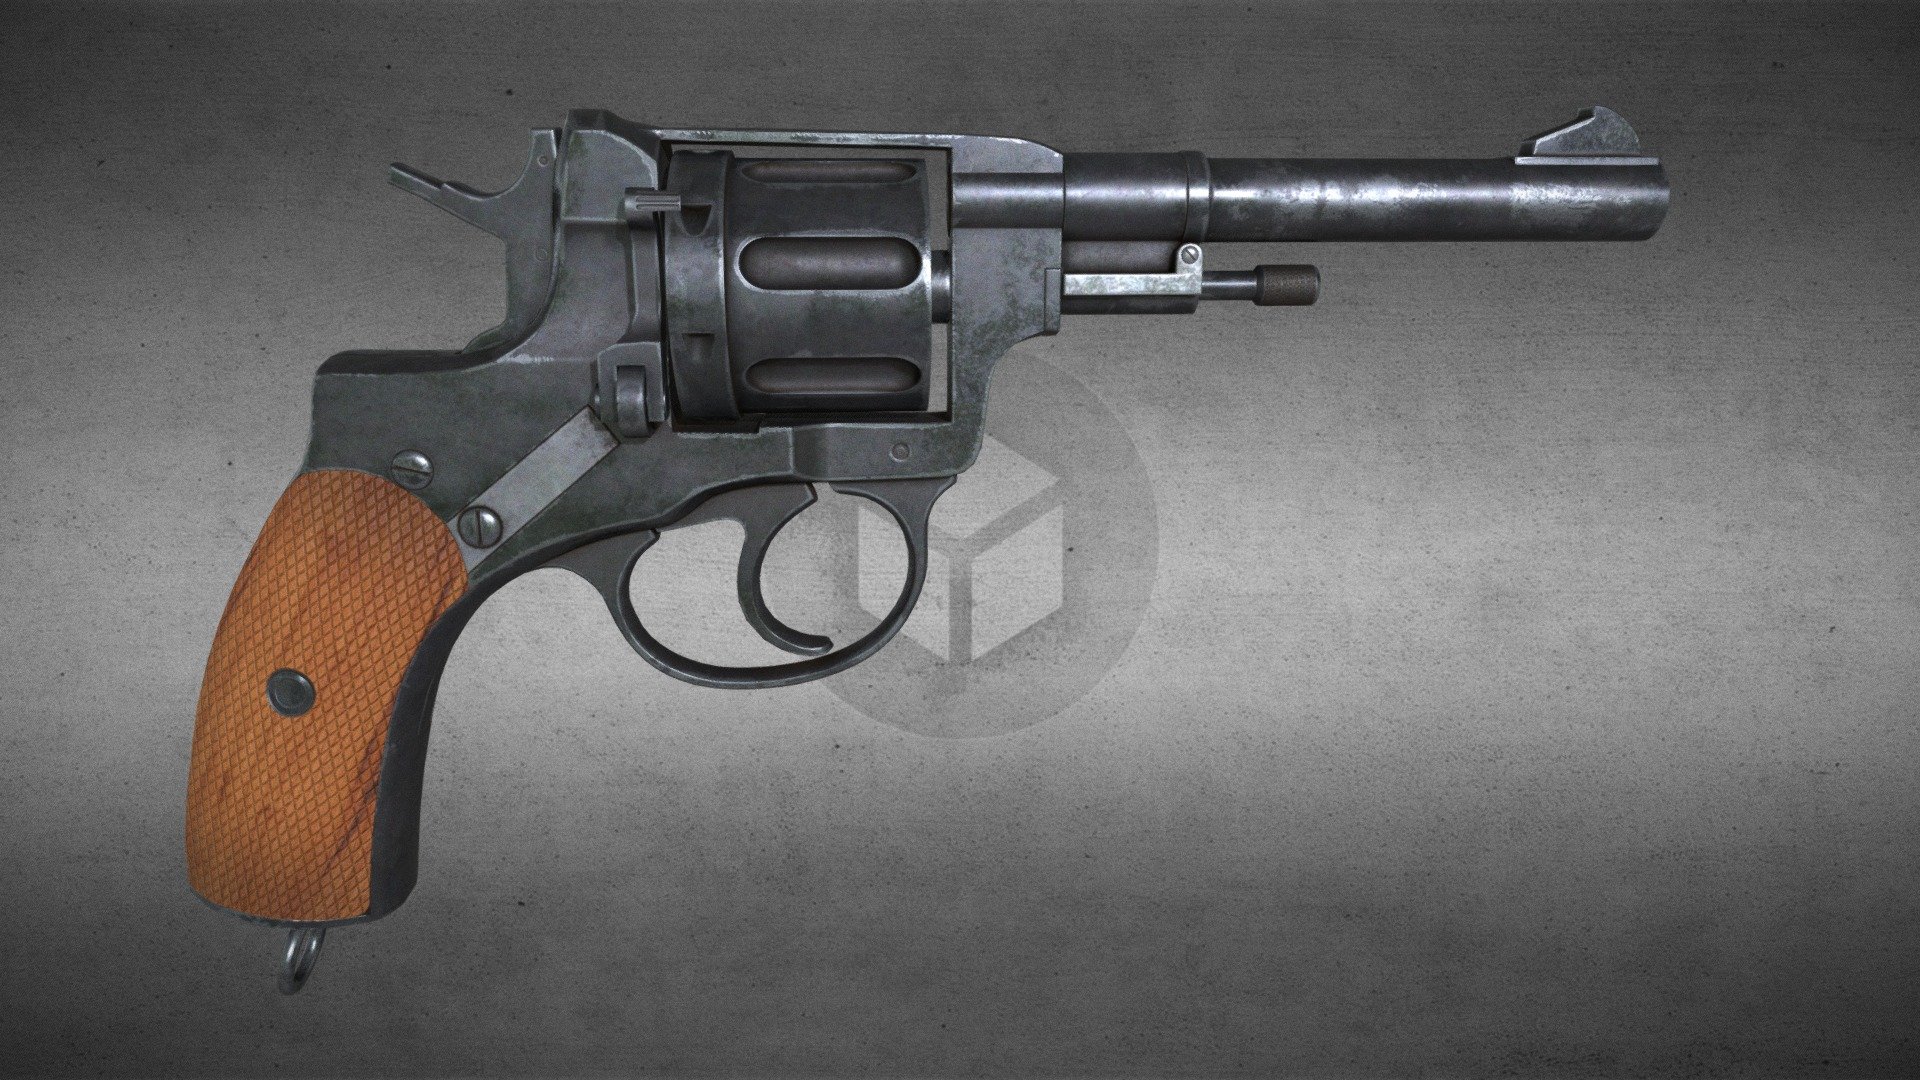 Recreation of the Nagant 1895 Revolver from &ldquo;Hunt: Showdown